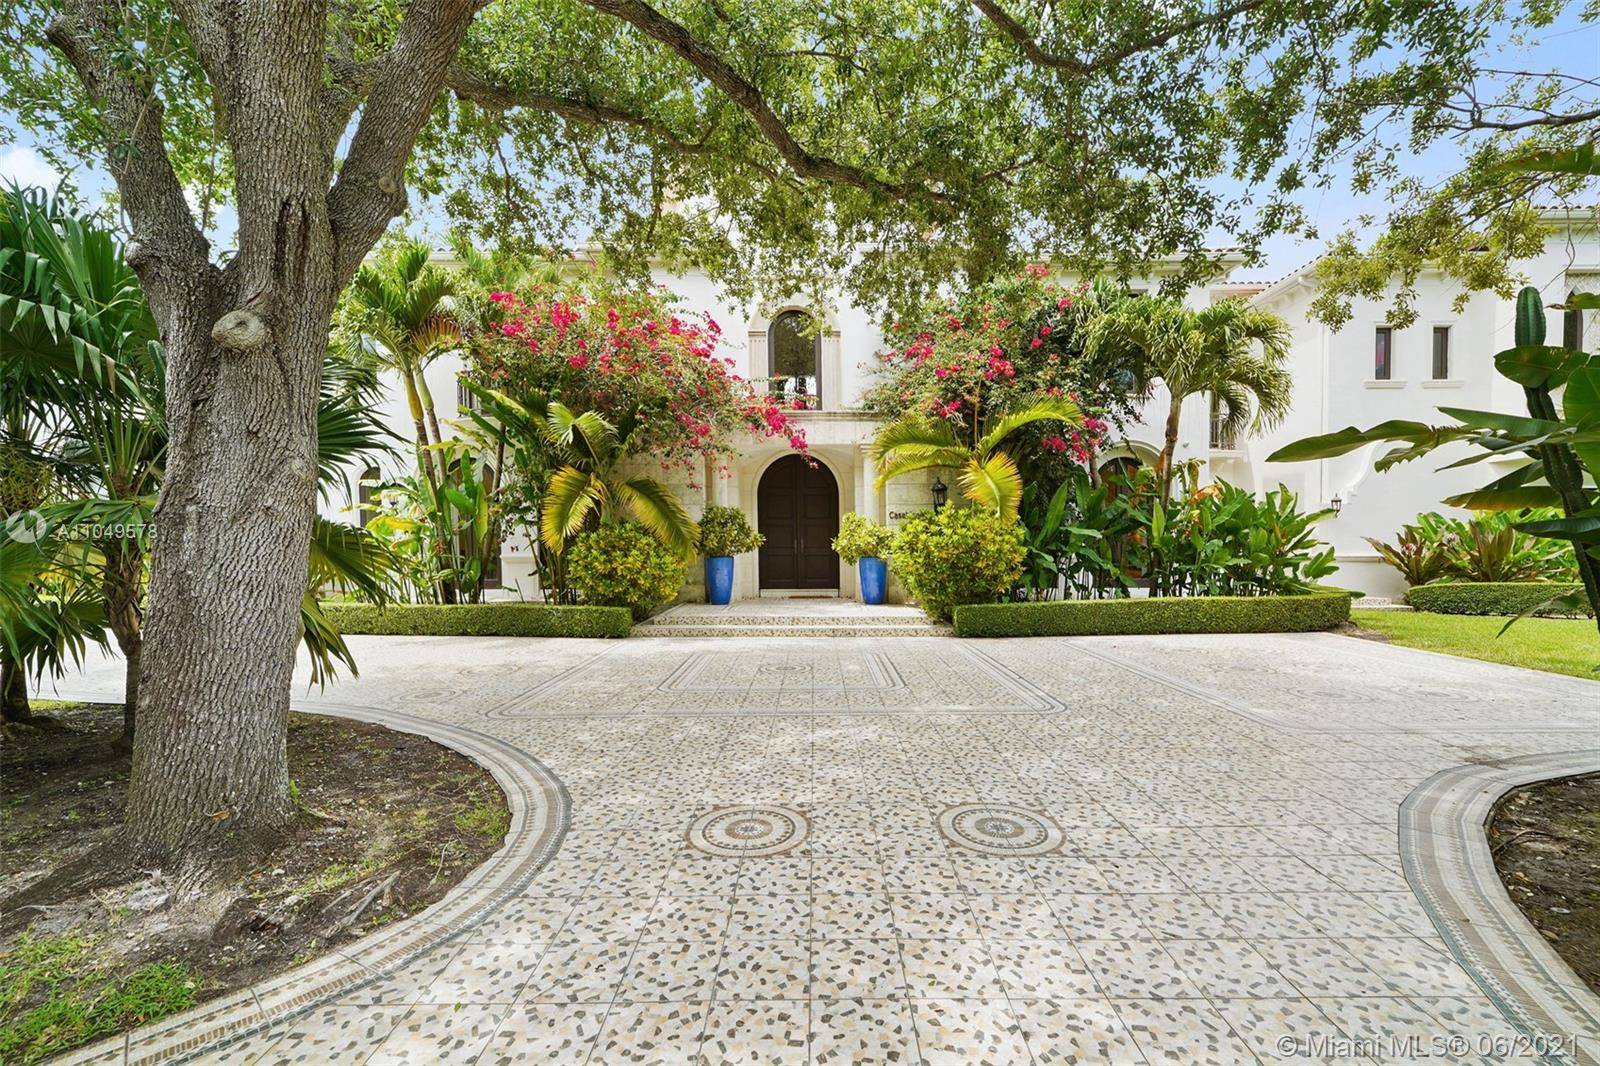 Located in one of Miami s most prestigious neighborhoods, Ponce Davis.